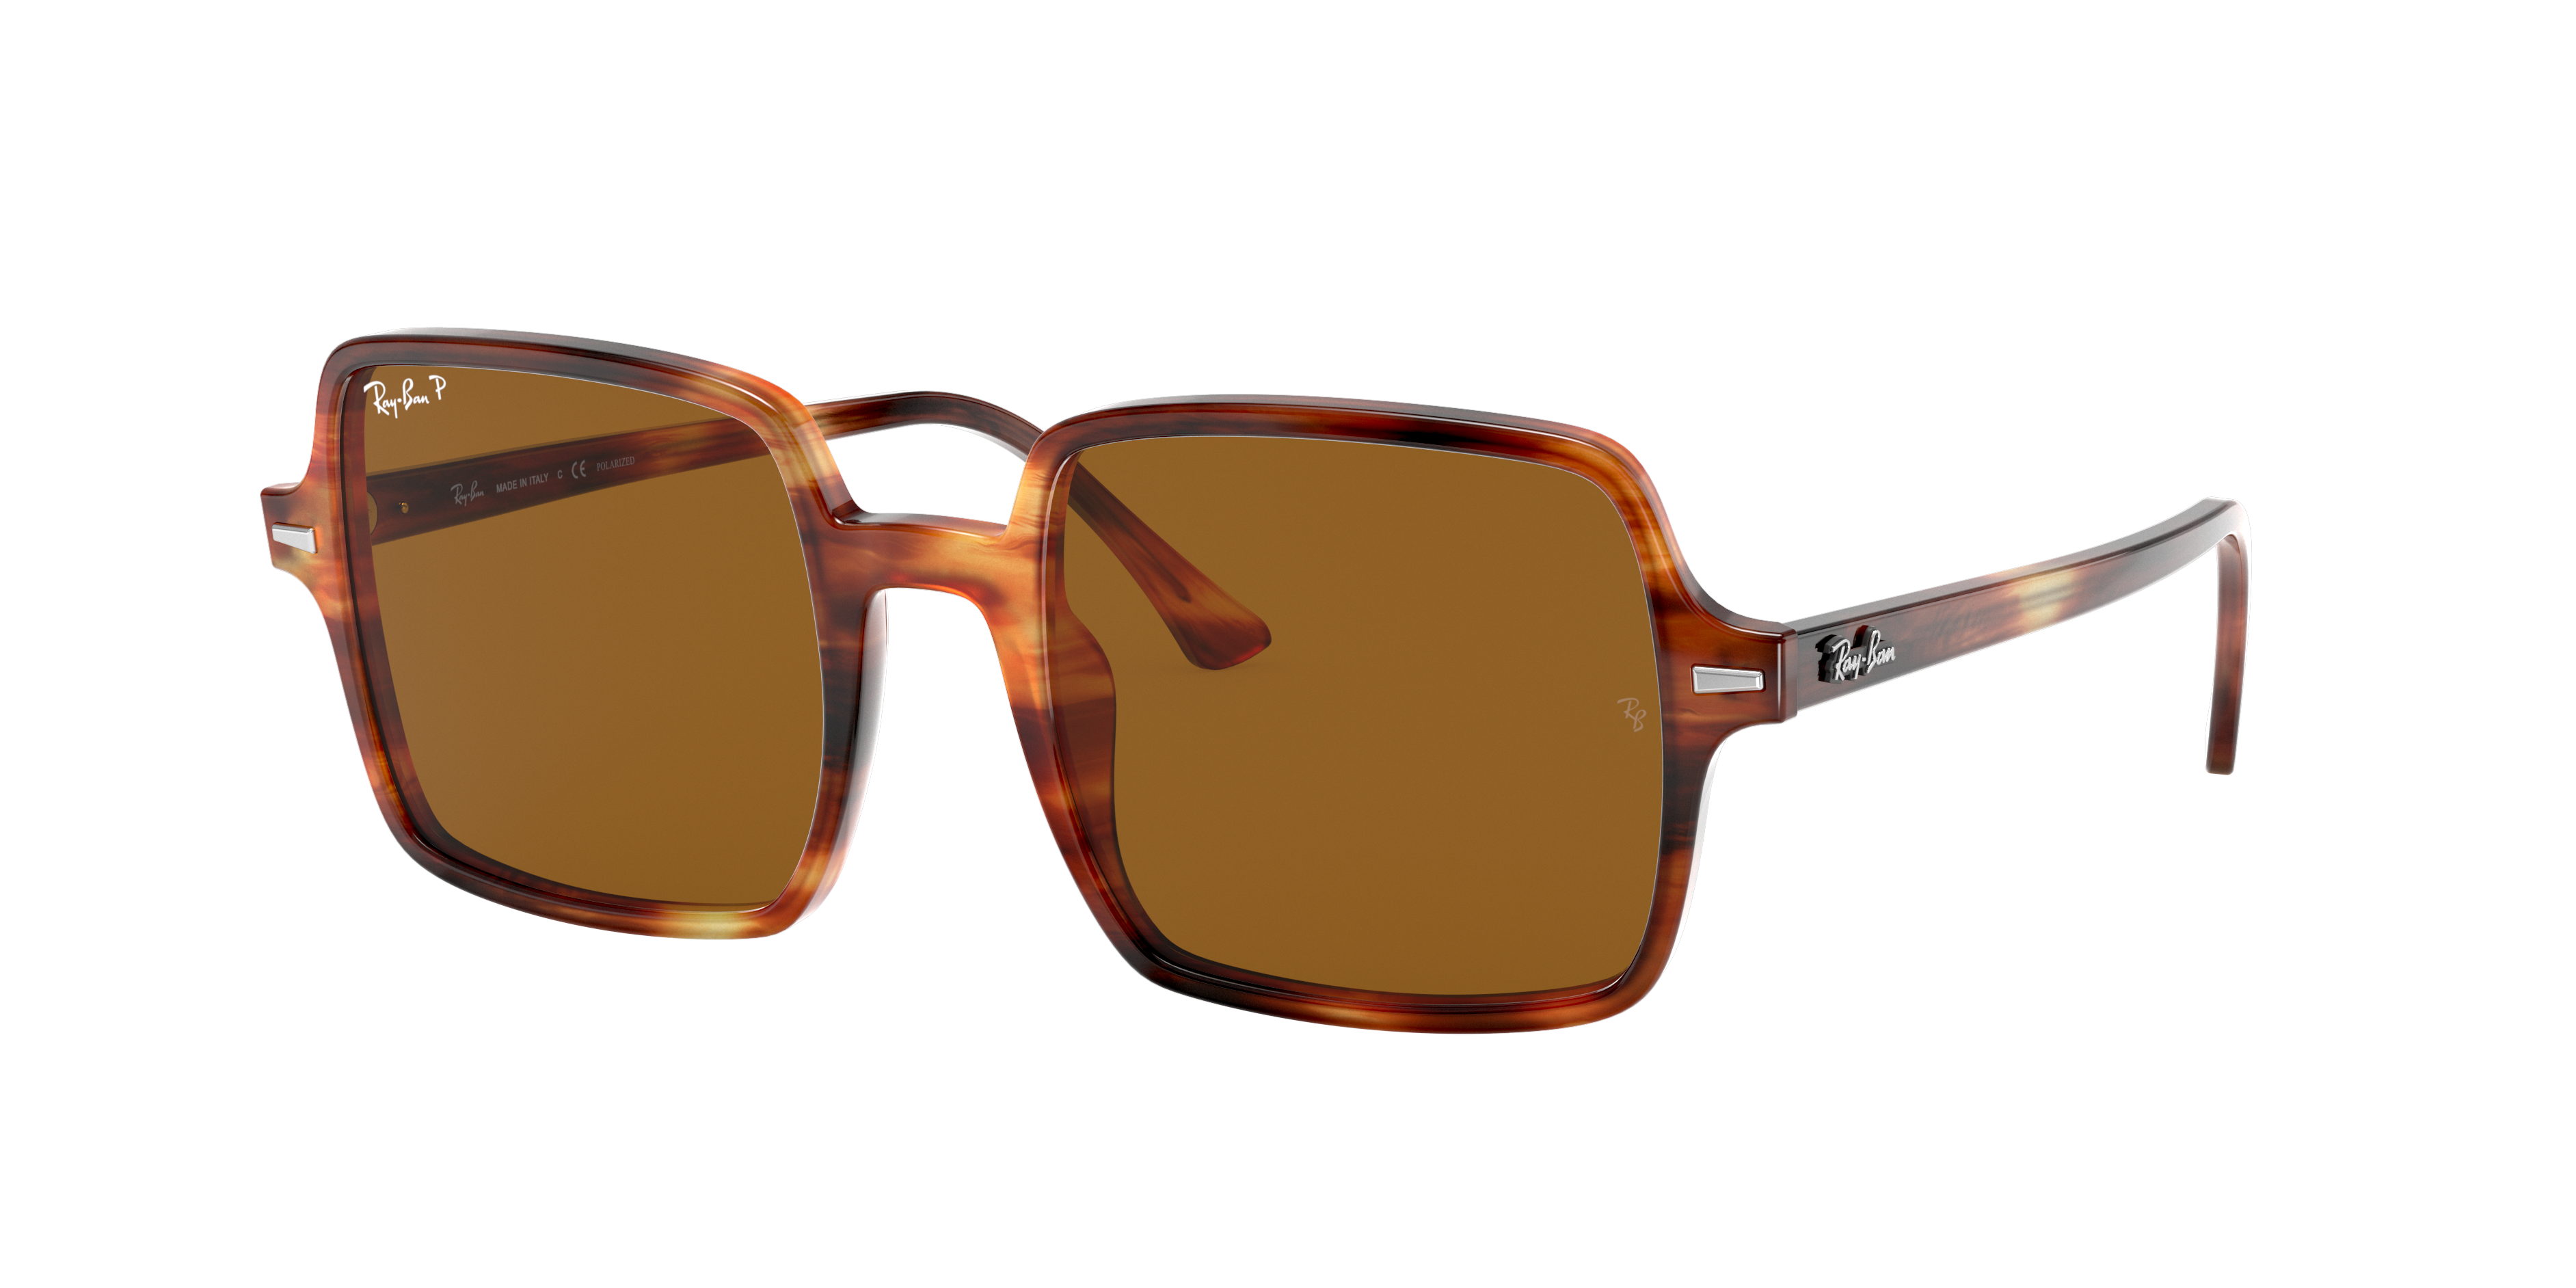 ray ban square sunglasses